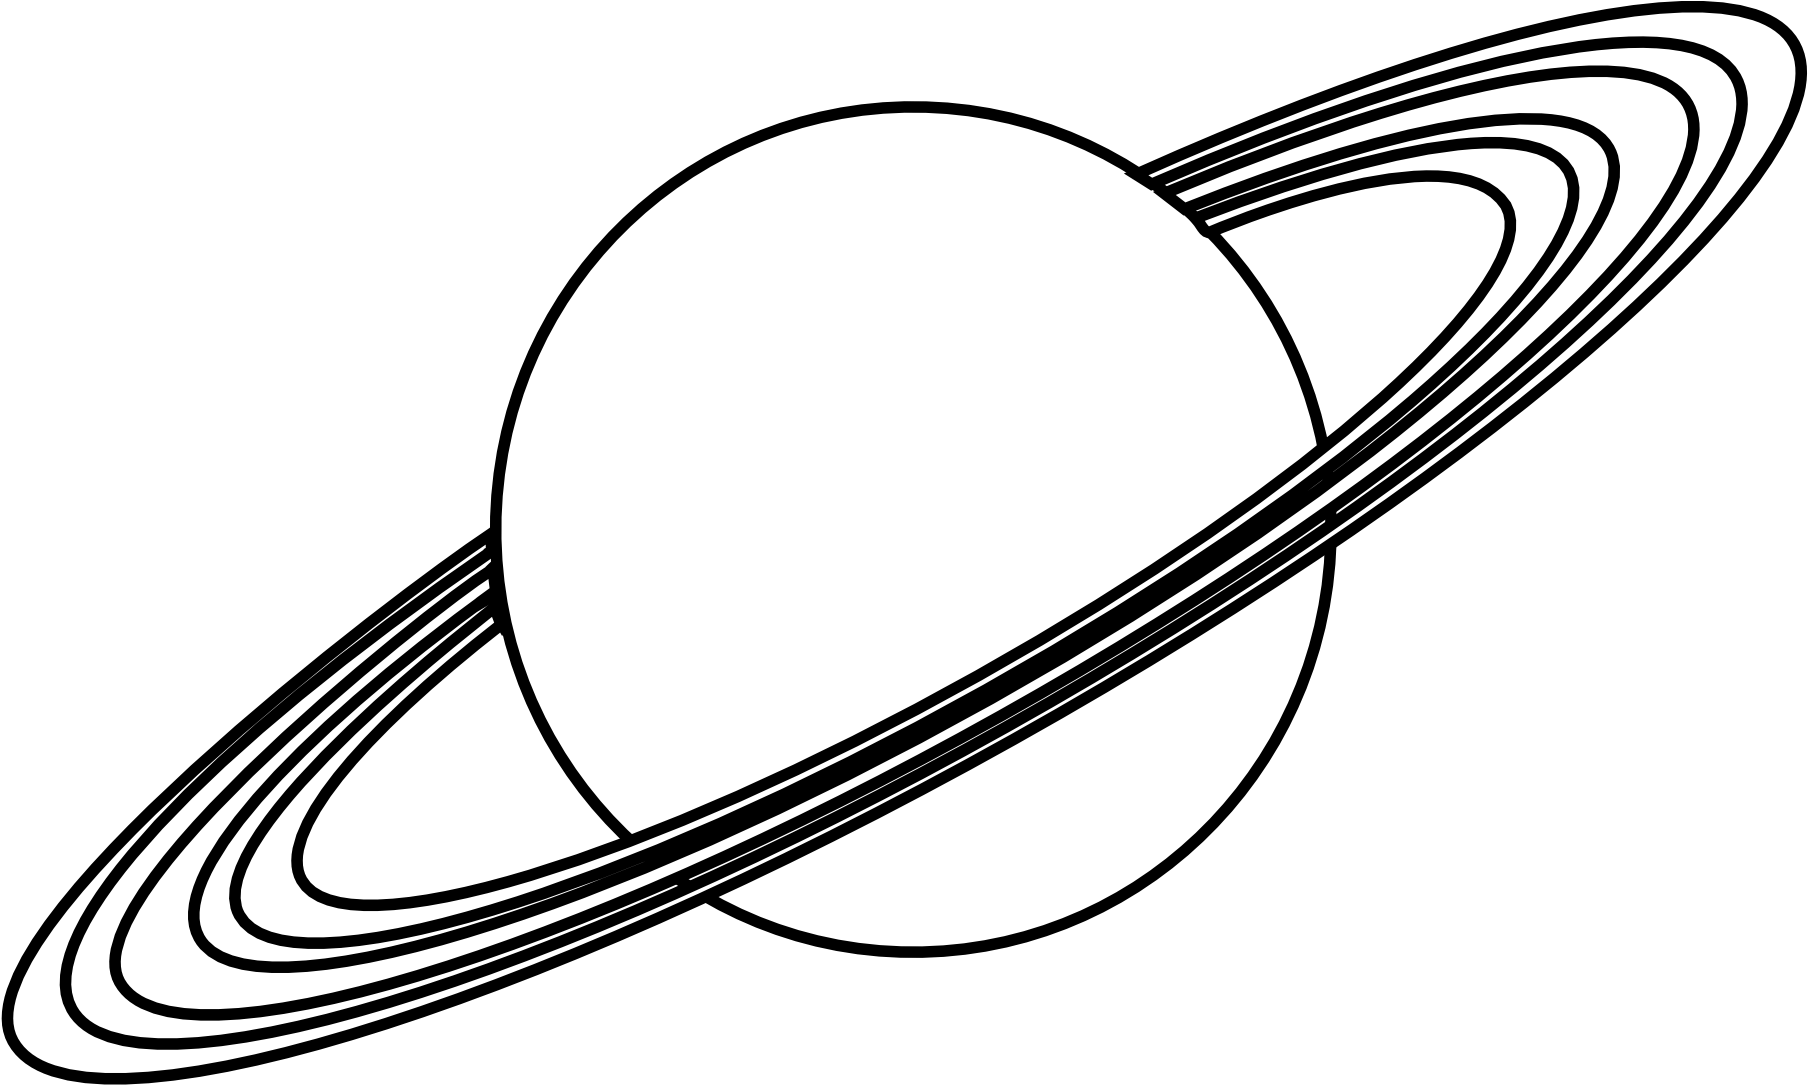 Saturn Planet Vector Illustration PNG image